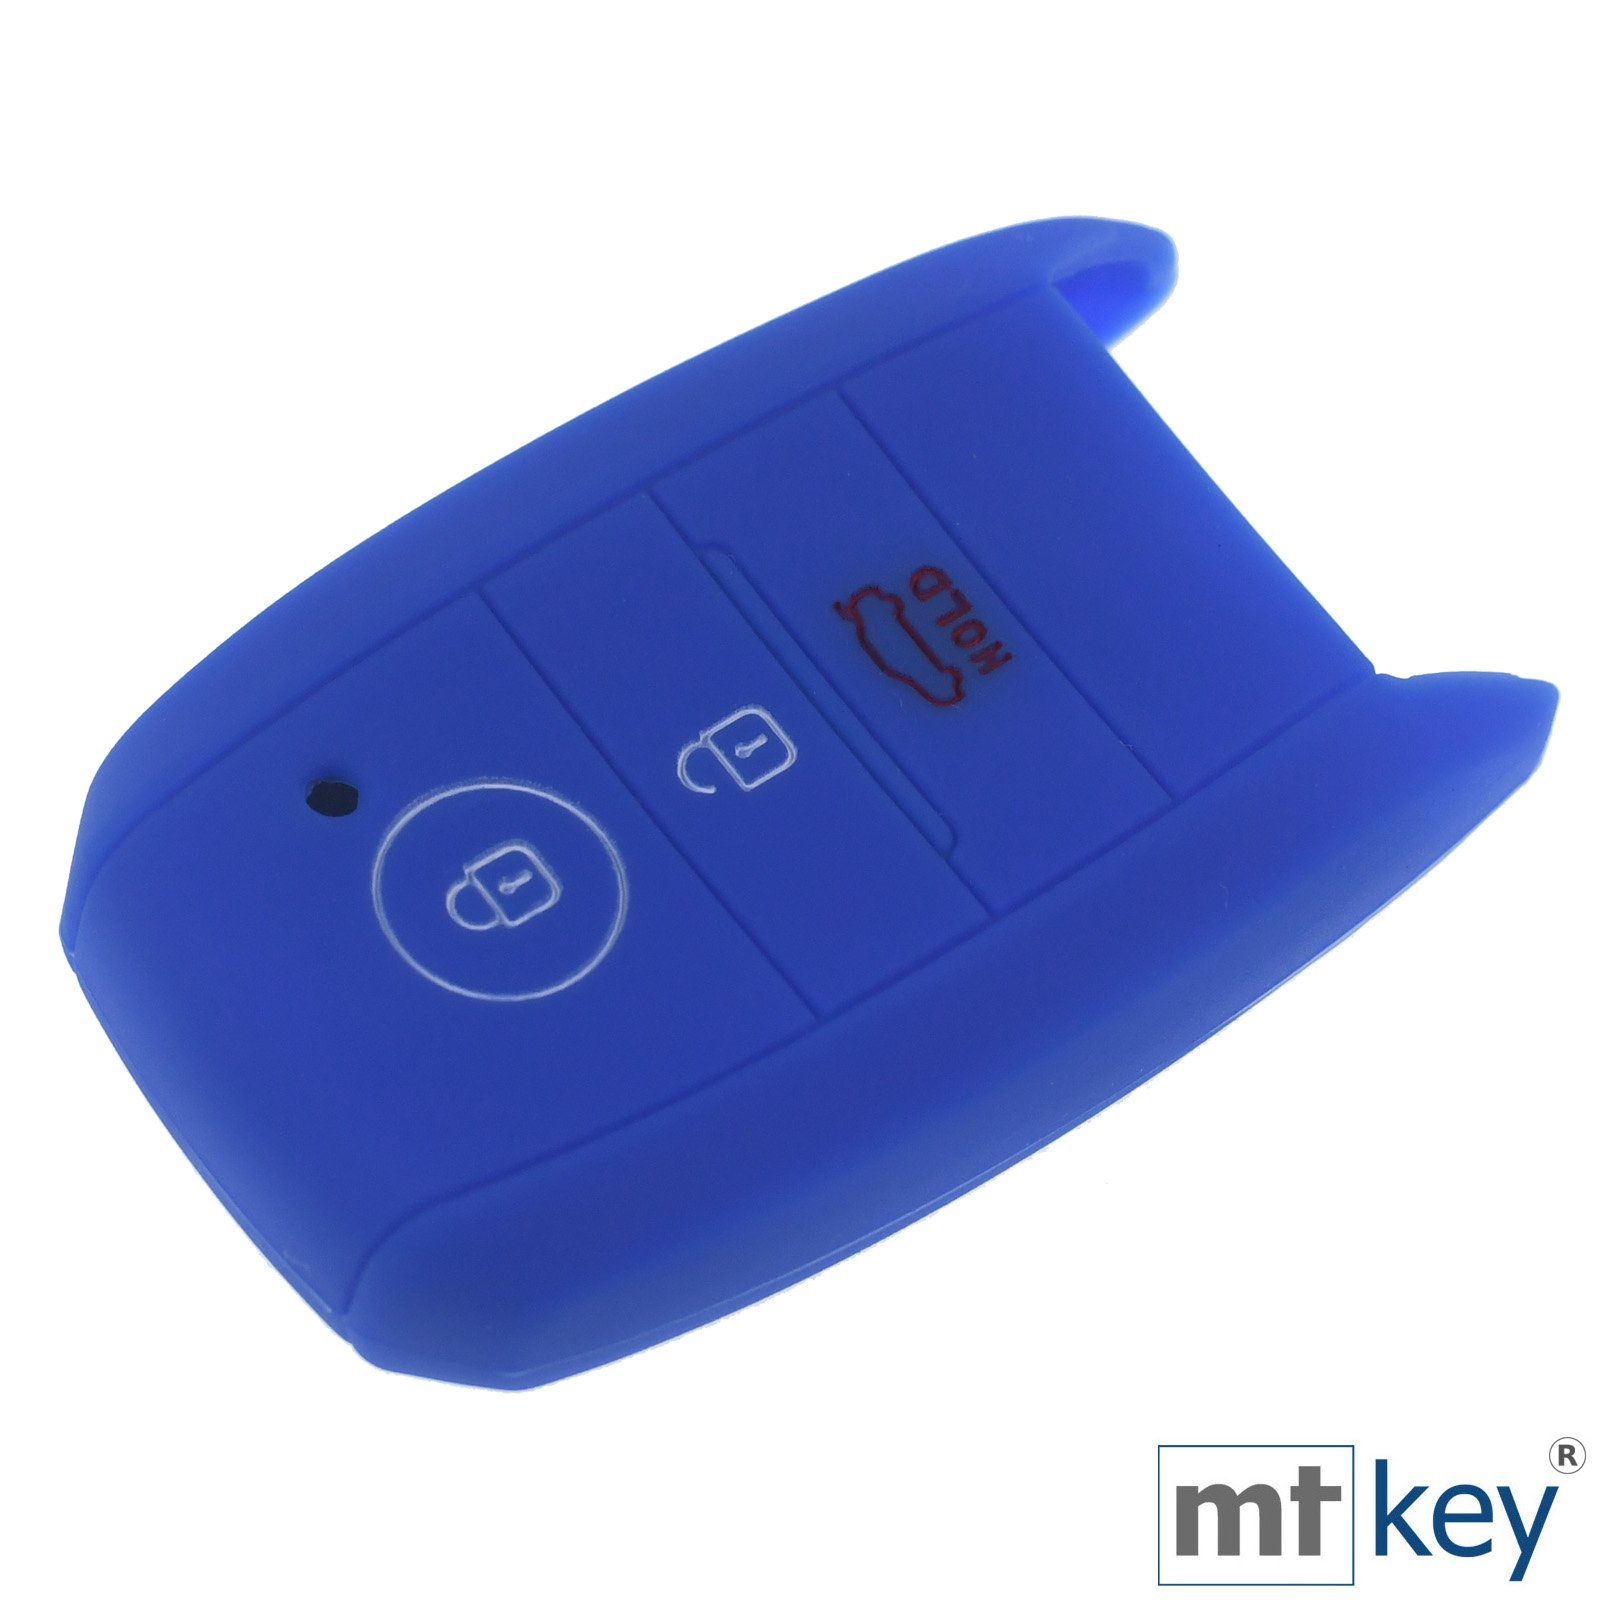 mt-key Schlüsseltasche Silikon 3 Tasten Rio Stonic Picantio Softcase KIA Autoschlüssel Ceed KEYLESS Soul Sportage für Blau, Schutzhülle